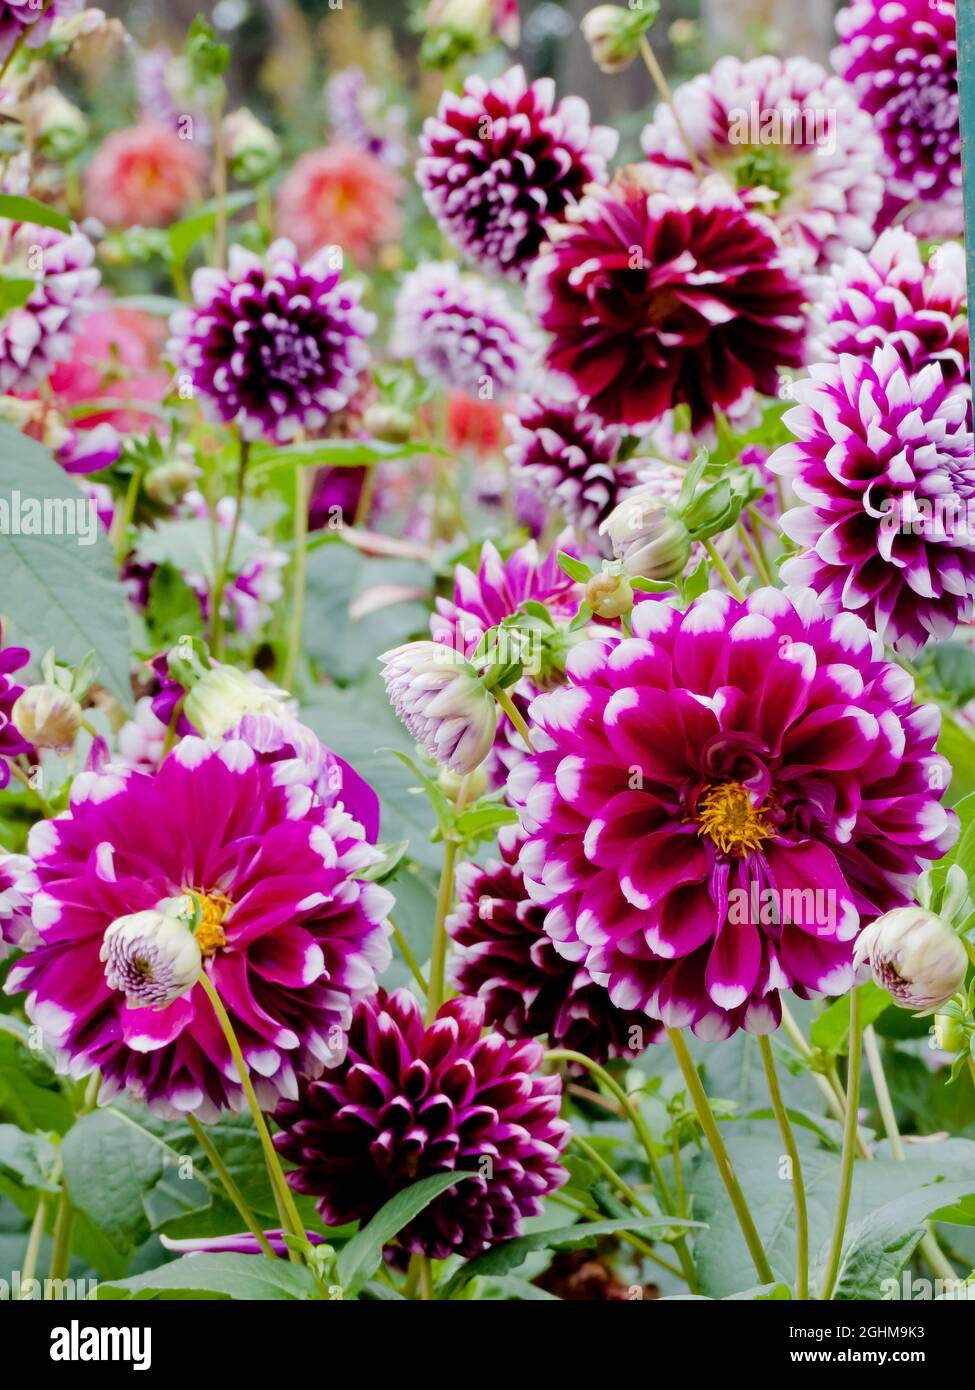 Dahlia 'Edimbourg' in bloom in a garden Stock Photo